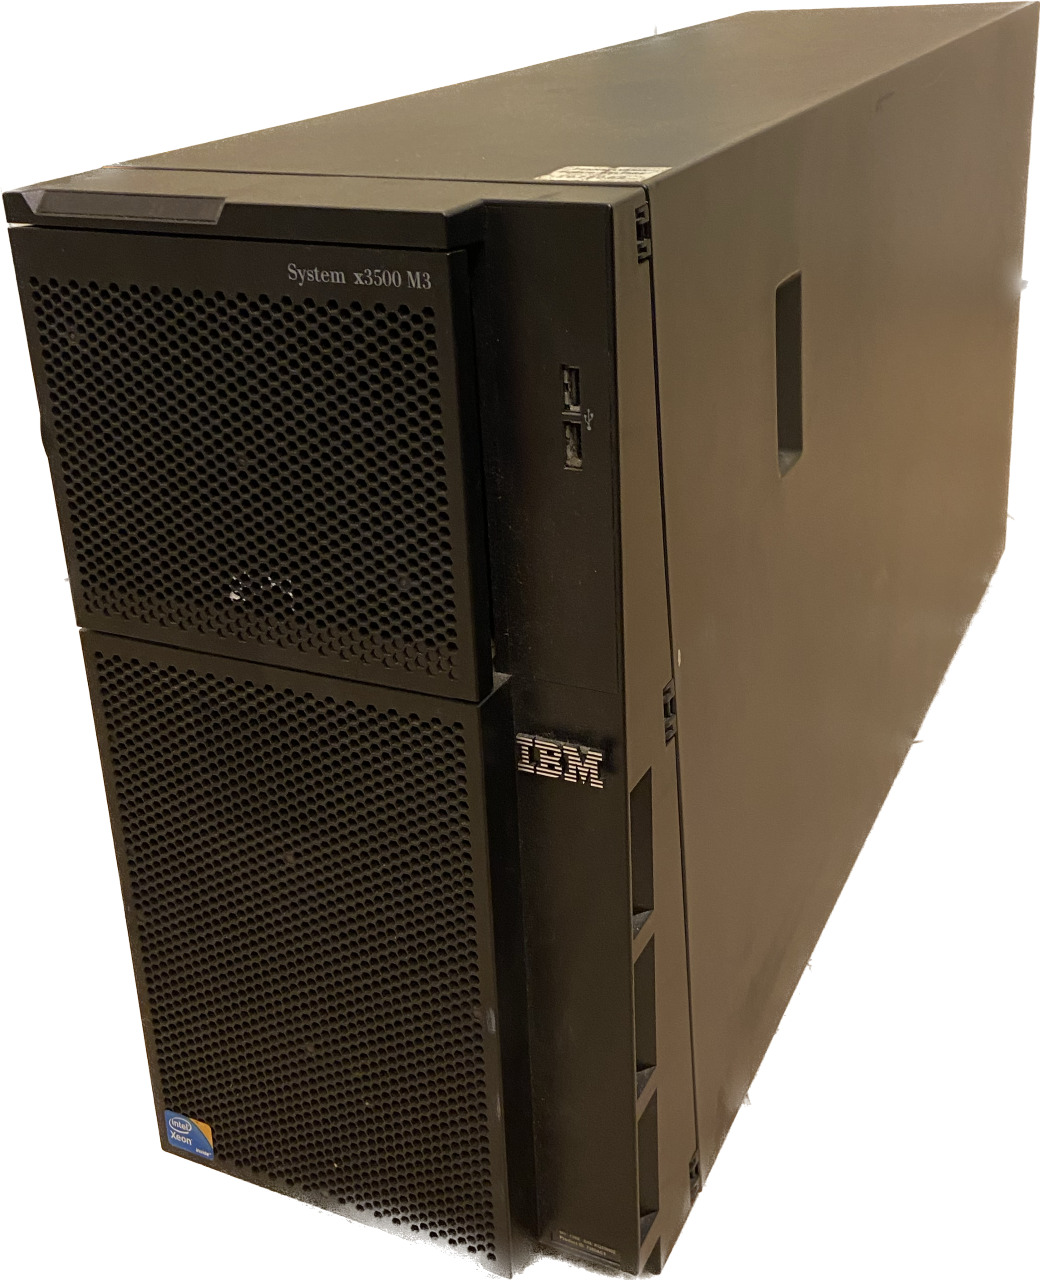 IBM System x3500 m3 Server